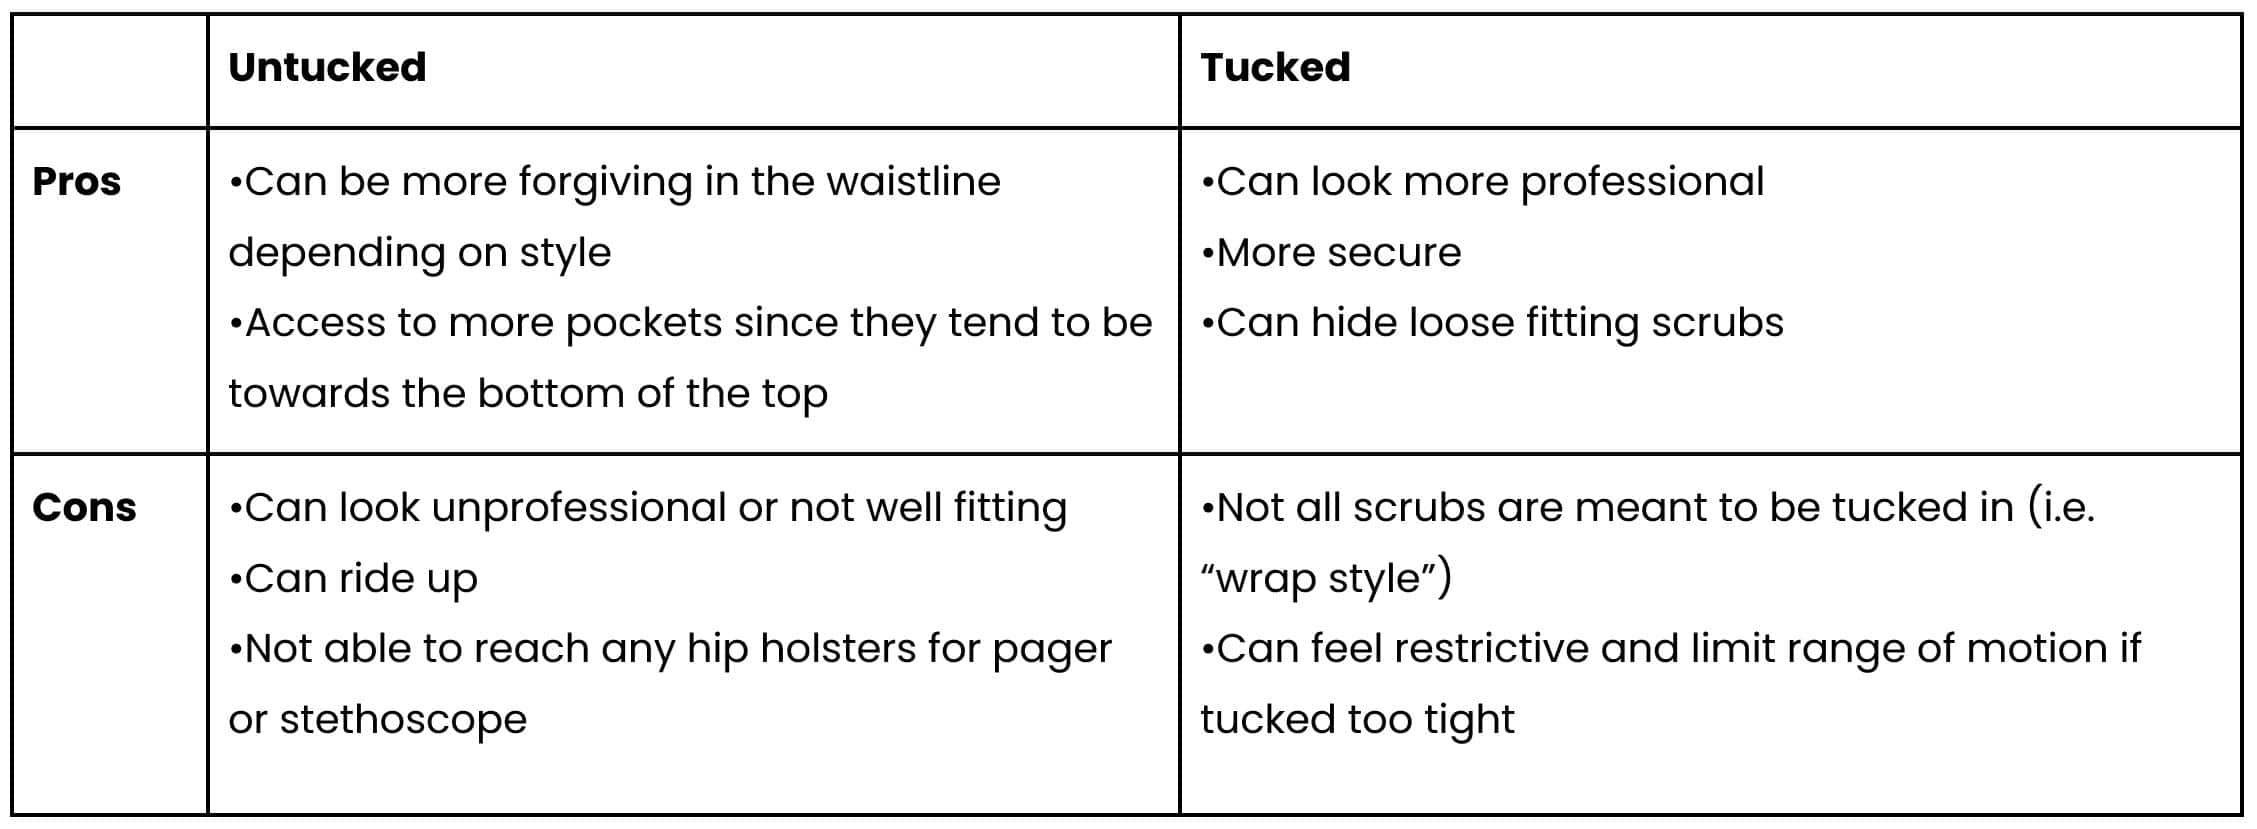 Tucked vs. Untucked: The Great Scrub Debate